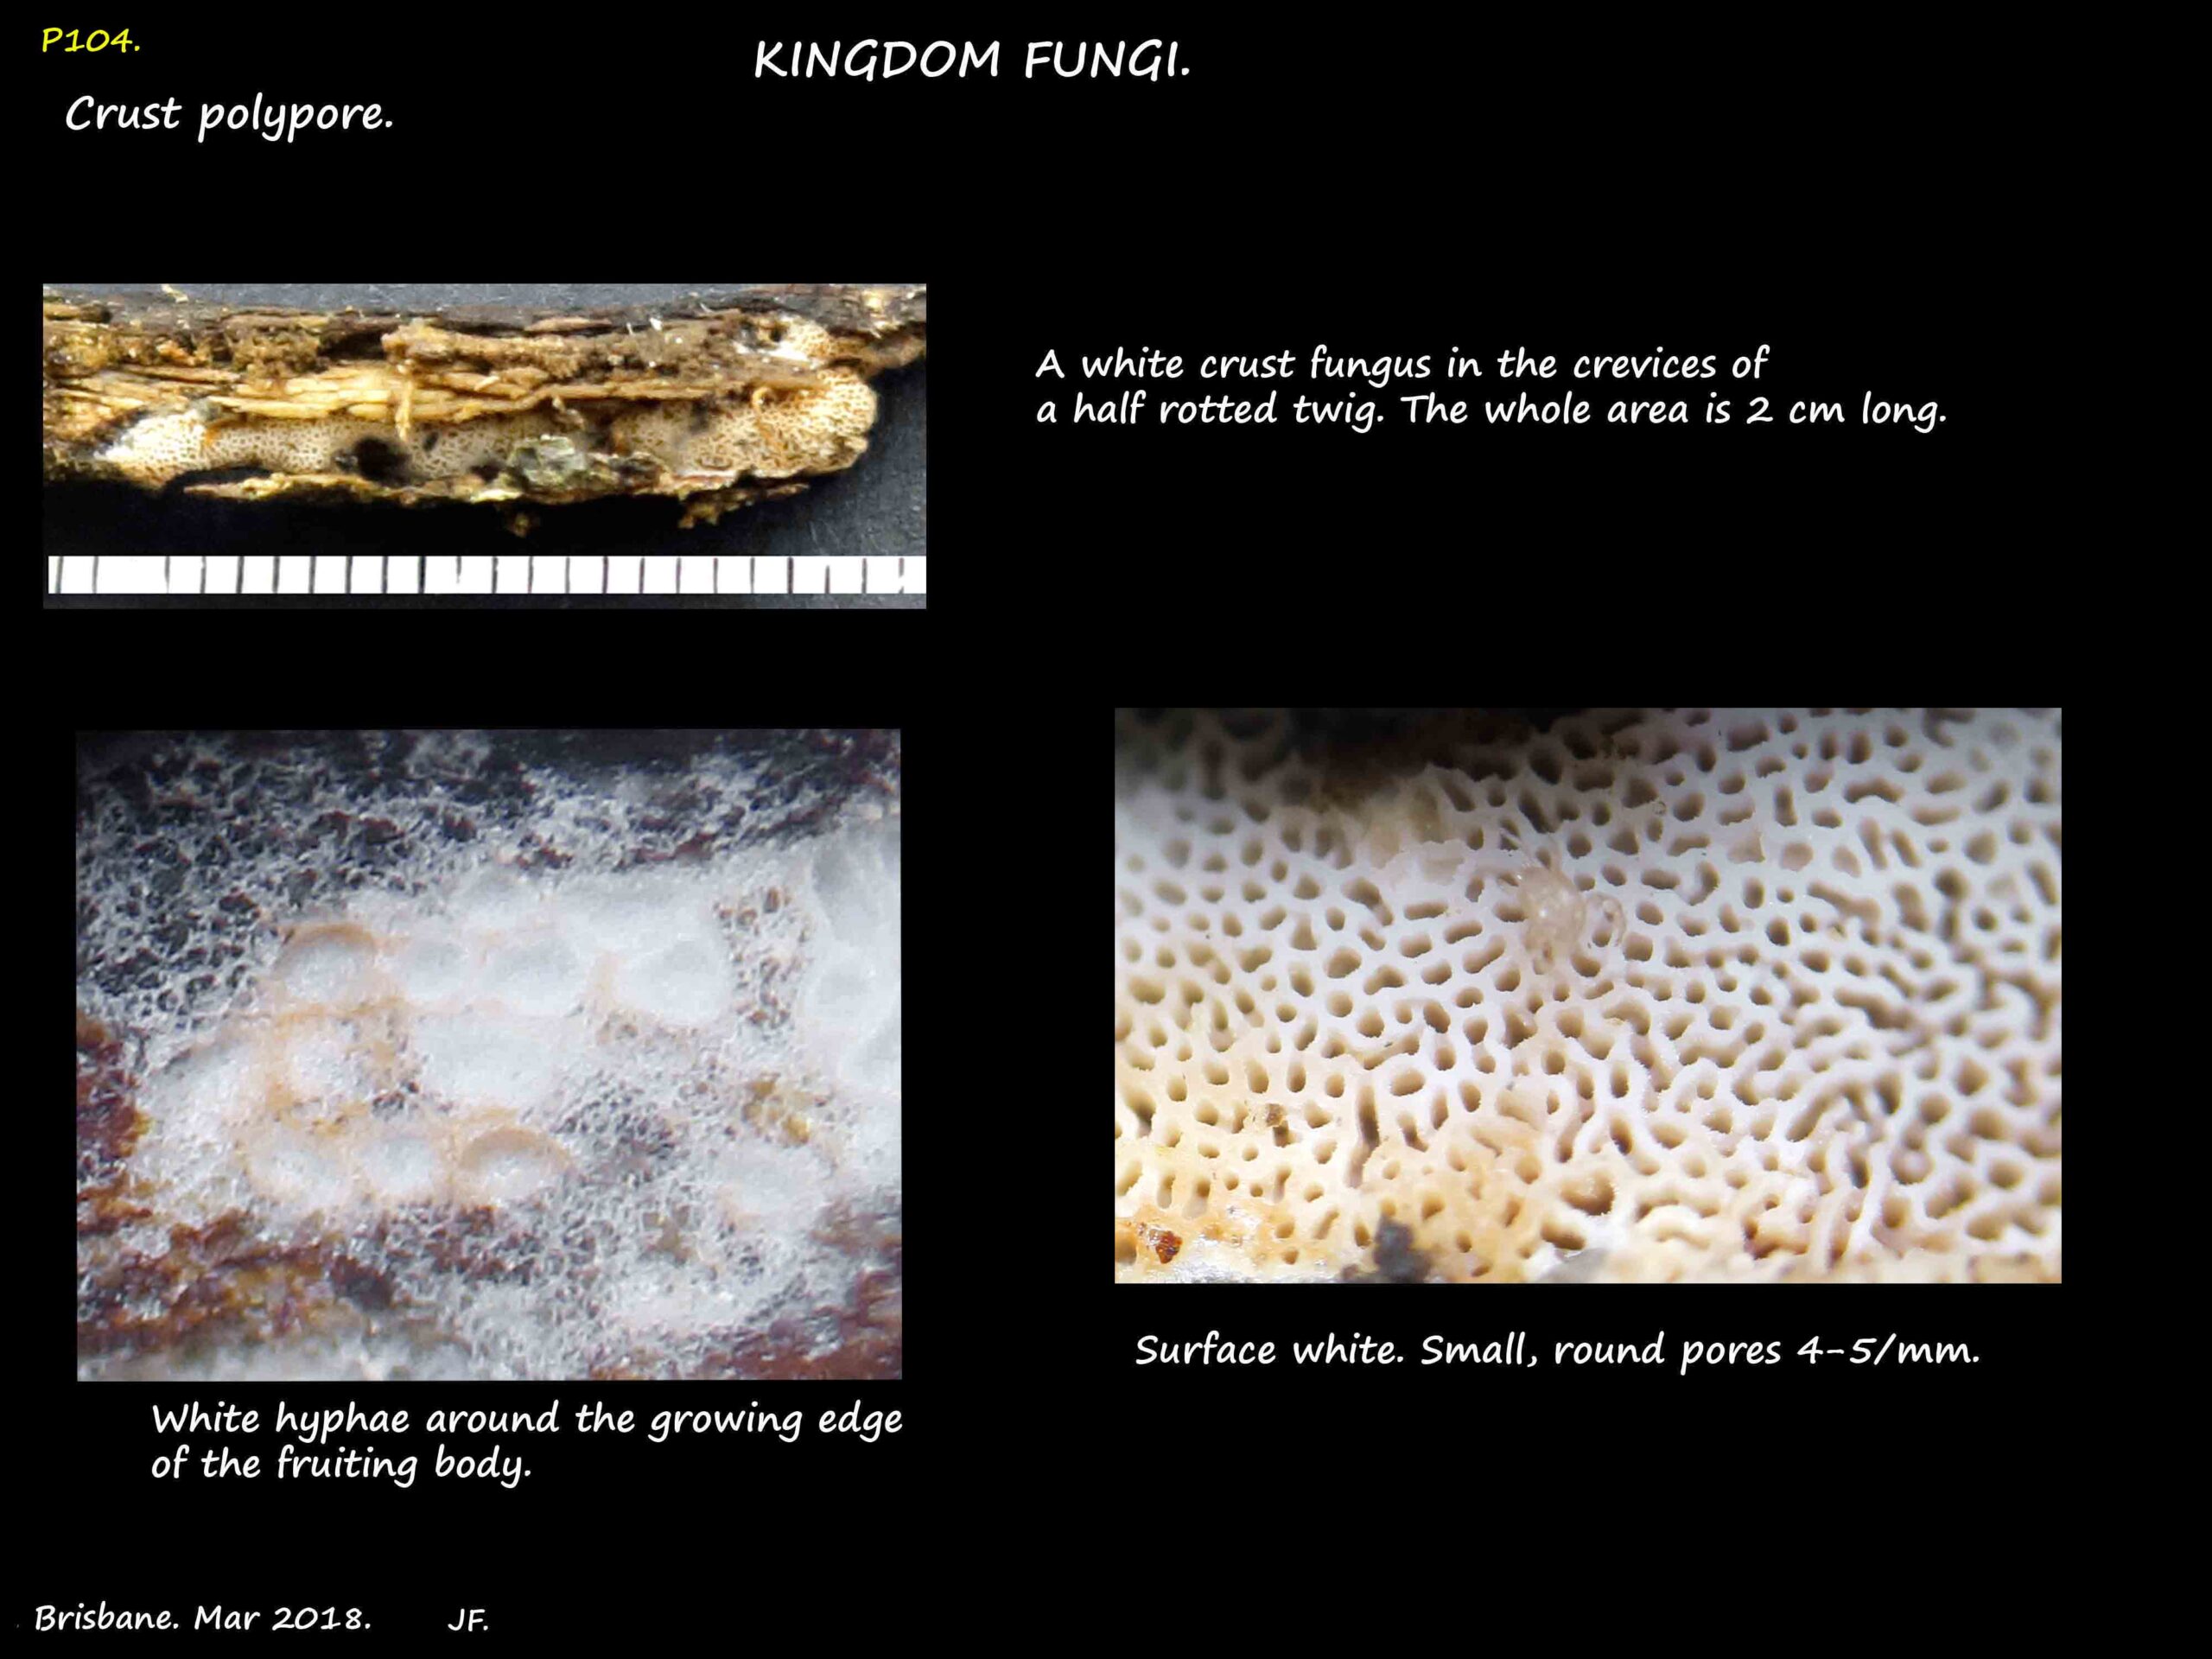 3 Hyphae around a white crust of a Polypore fungus